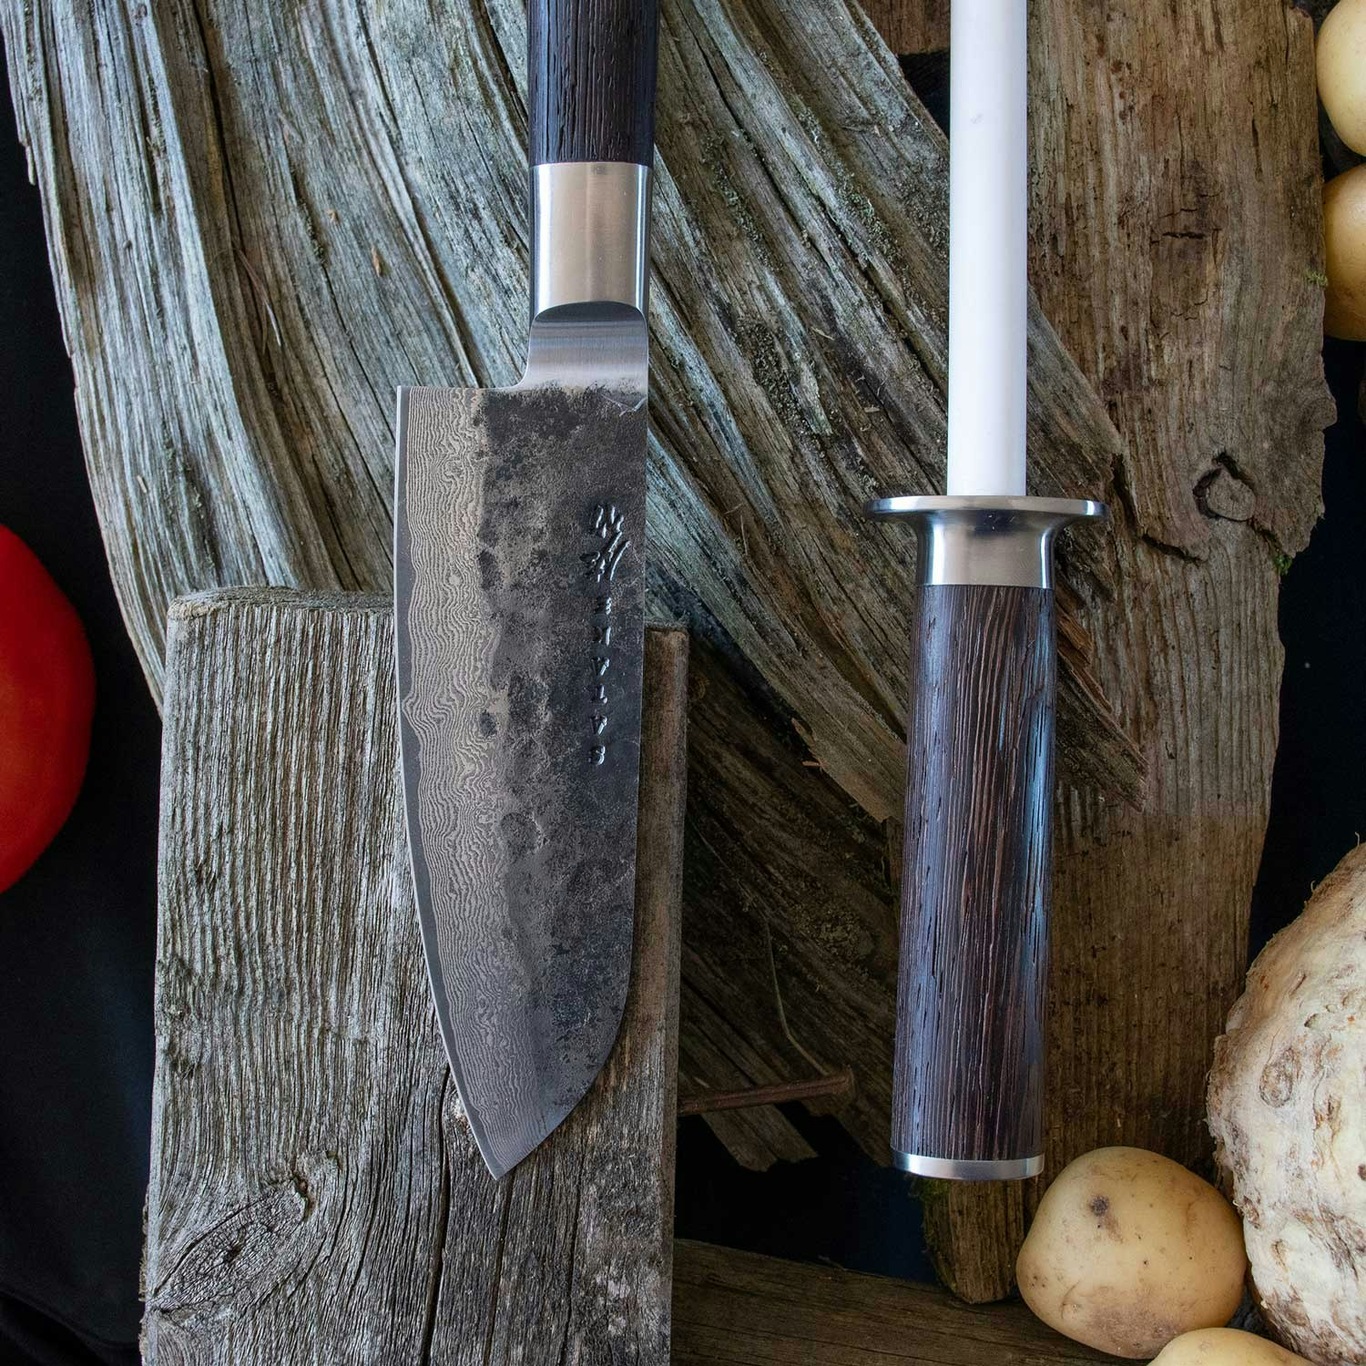 12 Knife Sharpener Sharpening Rod ABS Handle Honing Sharpening Steel For  Knives